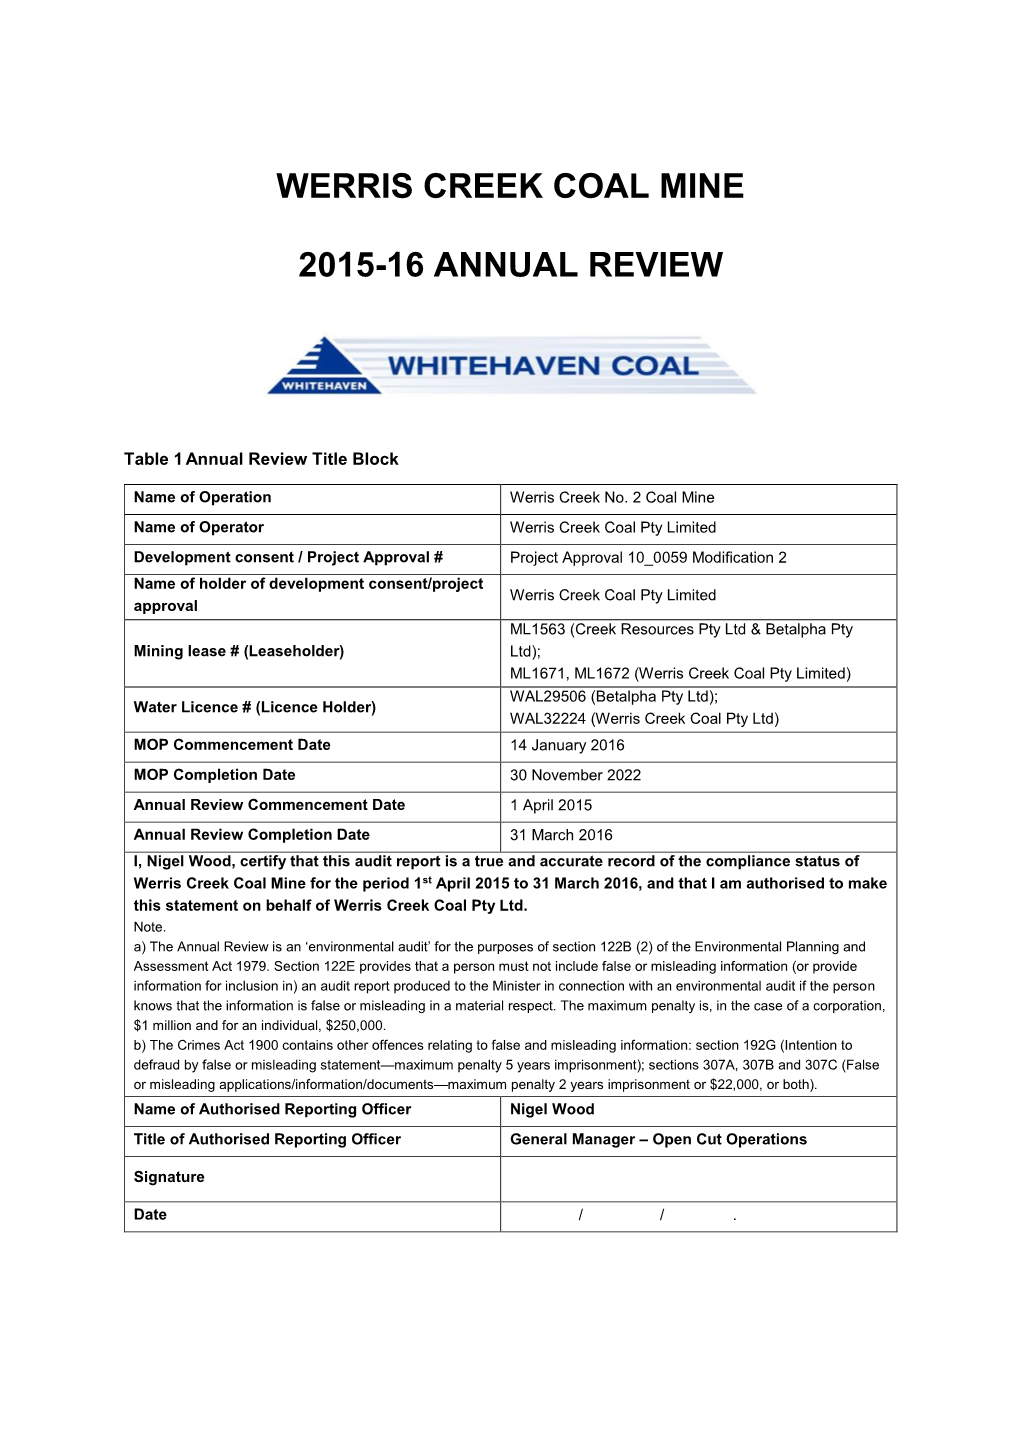 Werris Creek Coal Mine 2015-16 Annual Review